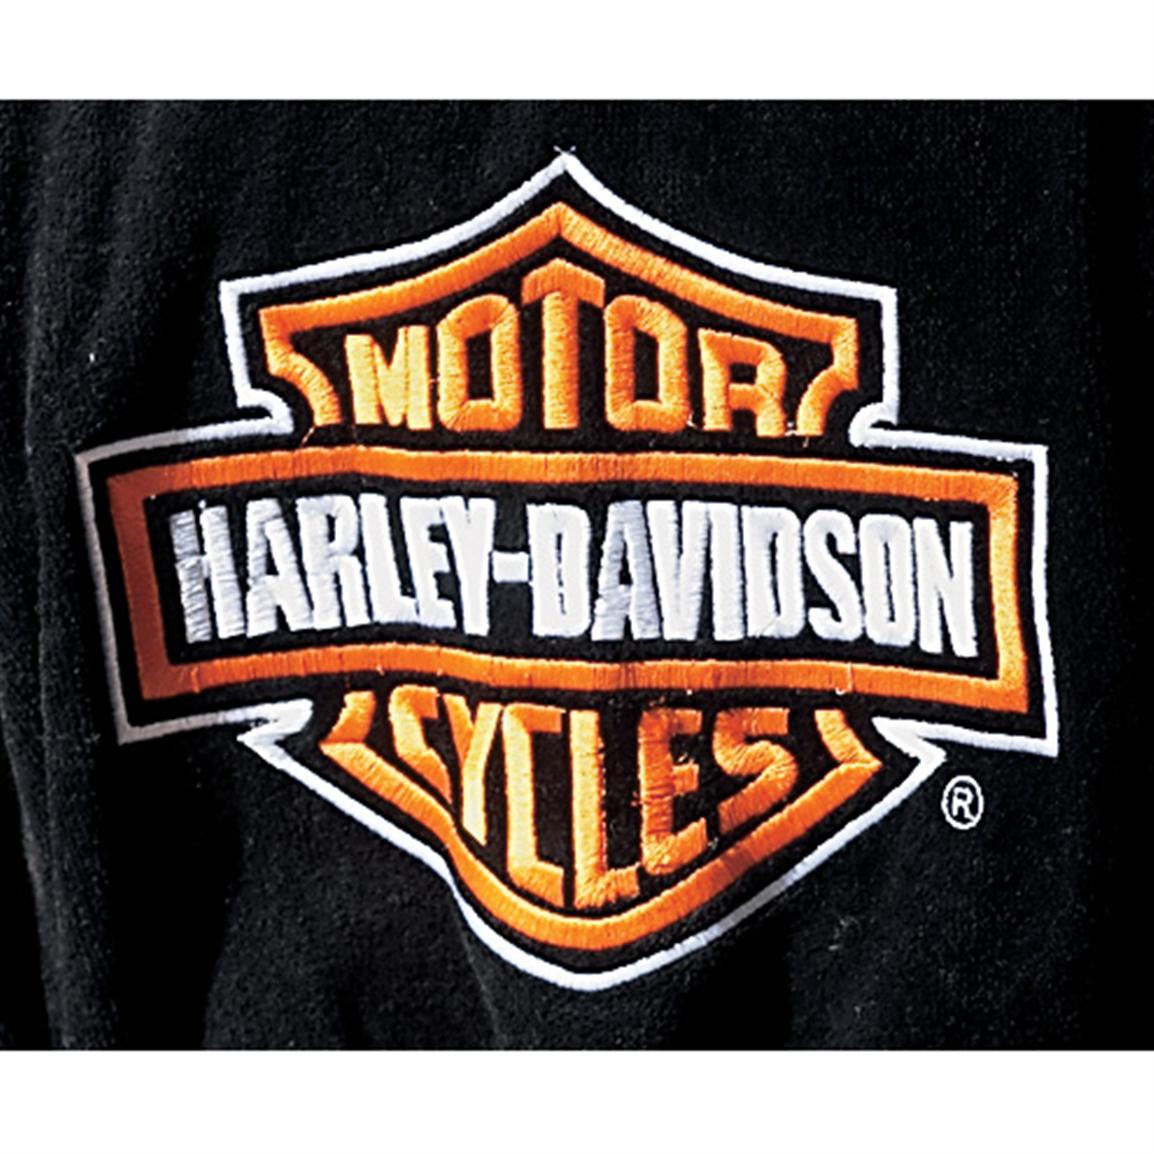 Harley - Davidson® Robe and Towel Set - 126148, Bath at Sportsman's Guide